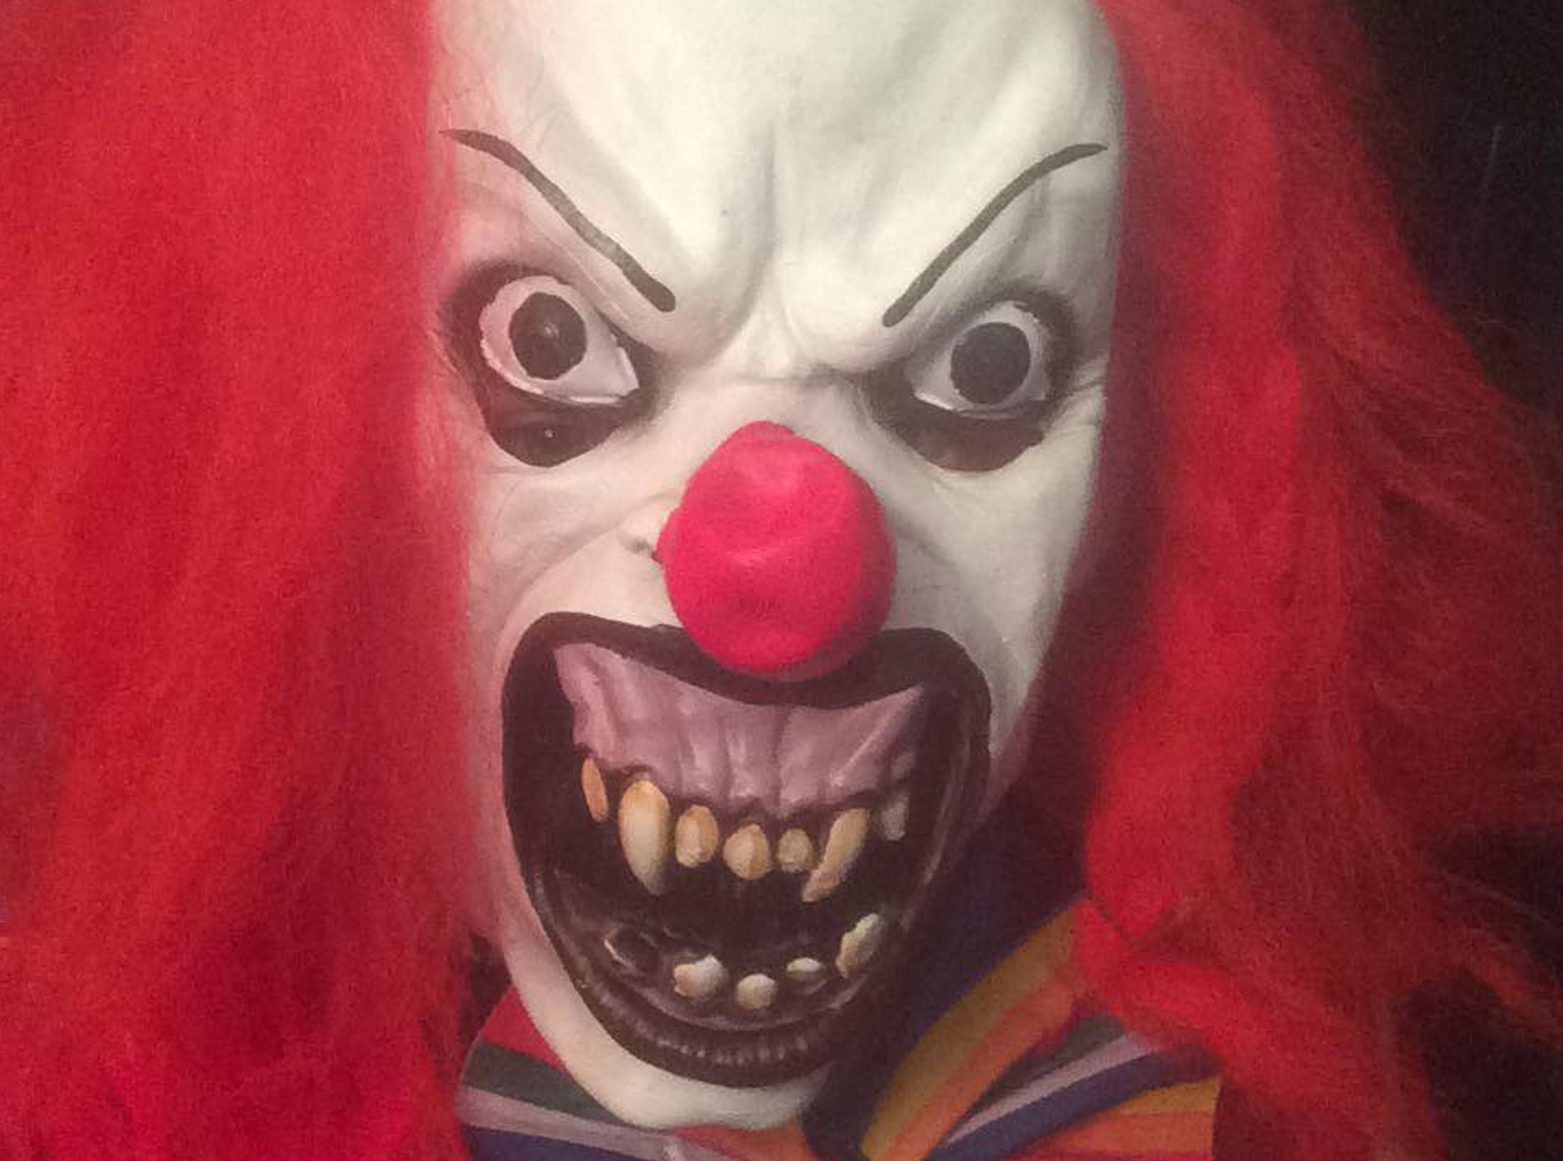 "Killer clown" craze (DC Thomson)